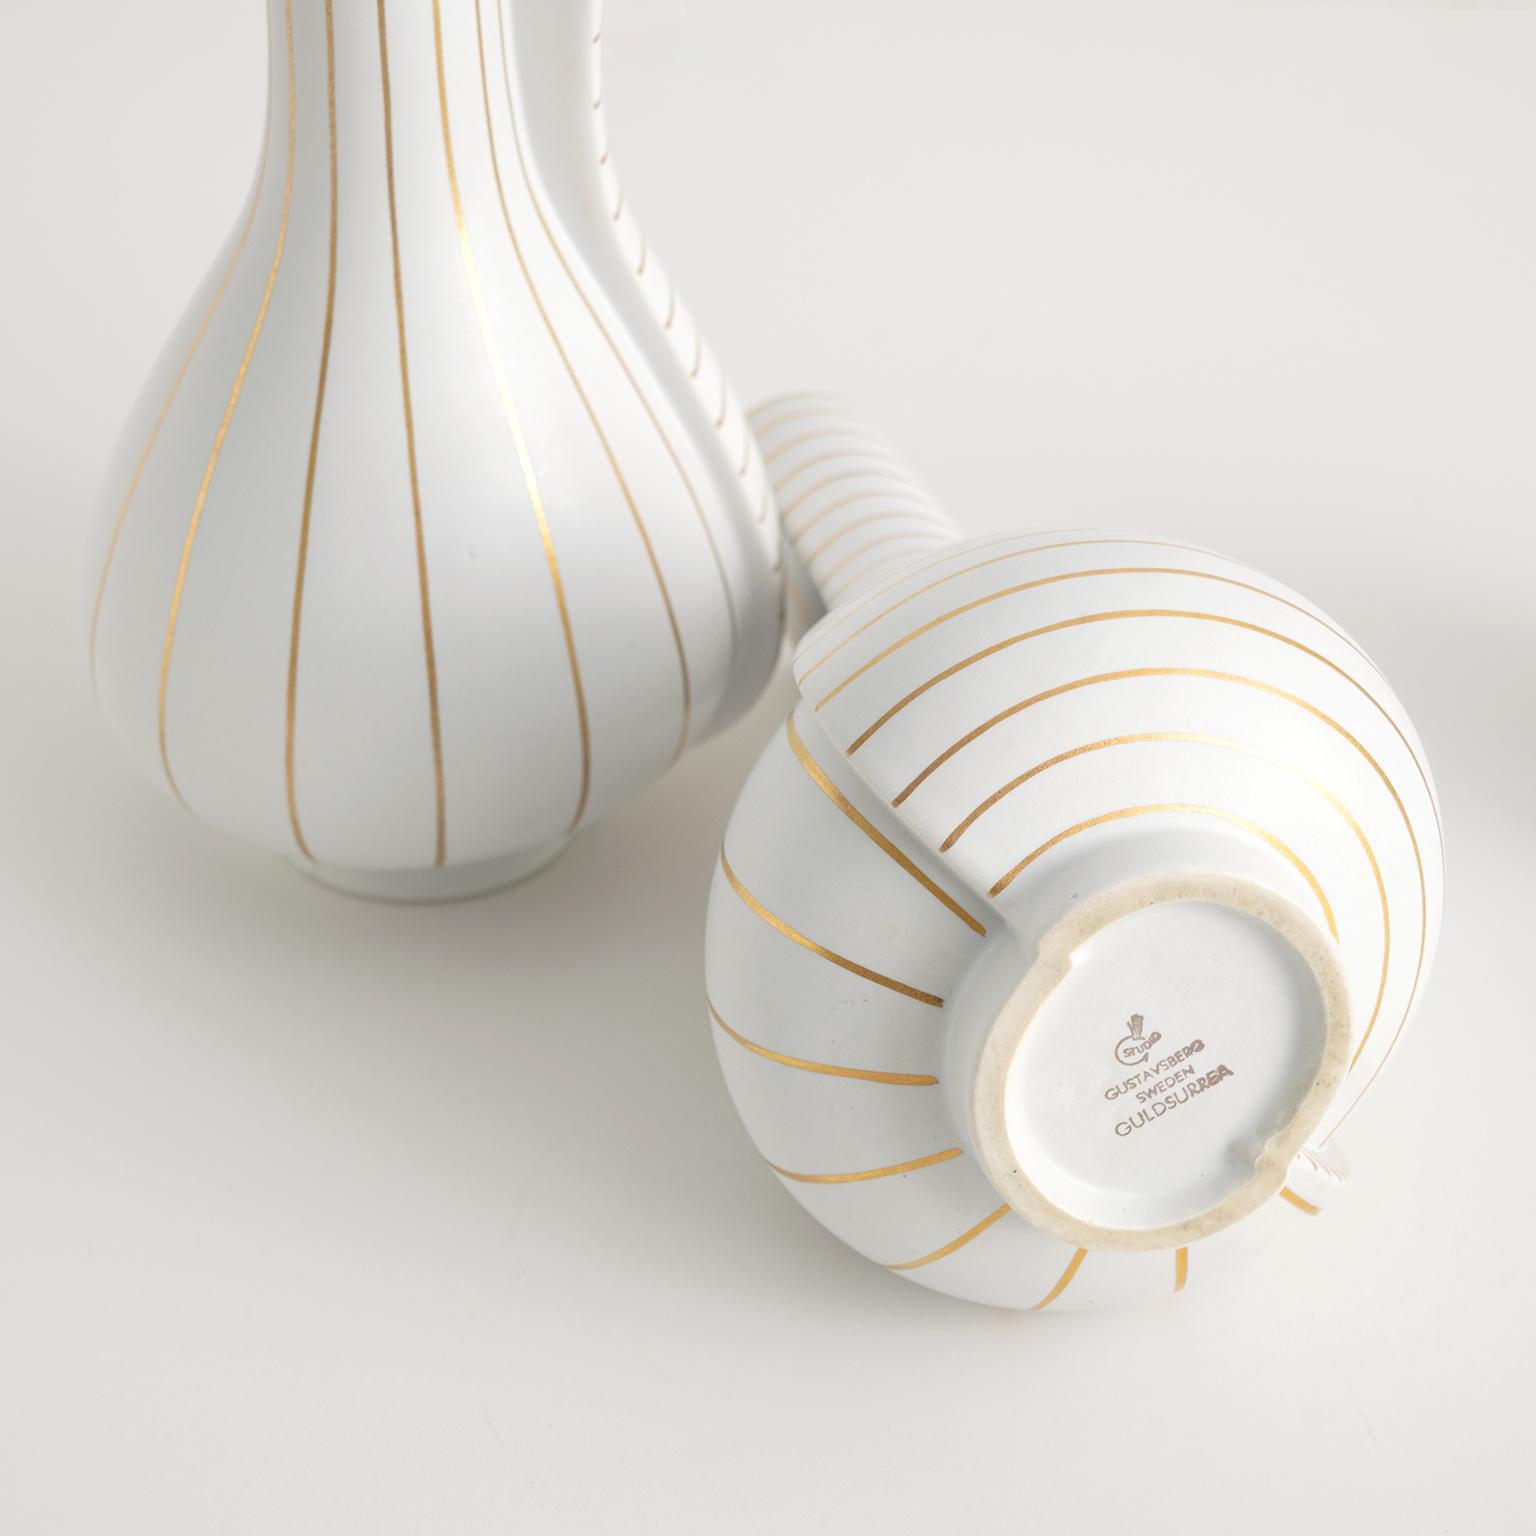 Ceramic Group of 3 Surrea Series Vases Designed by Wilhelm Kåge for Gustavsberg